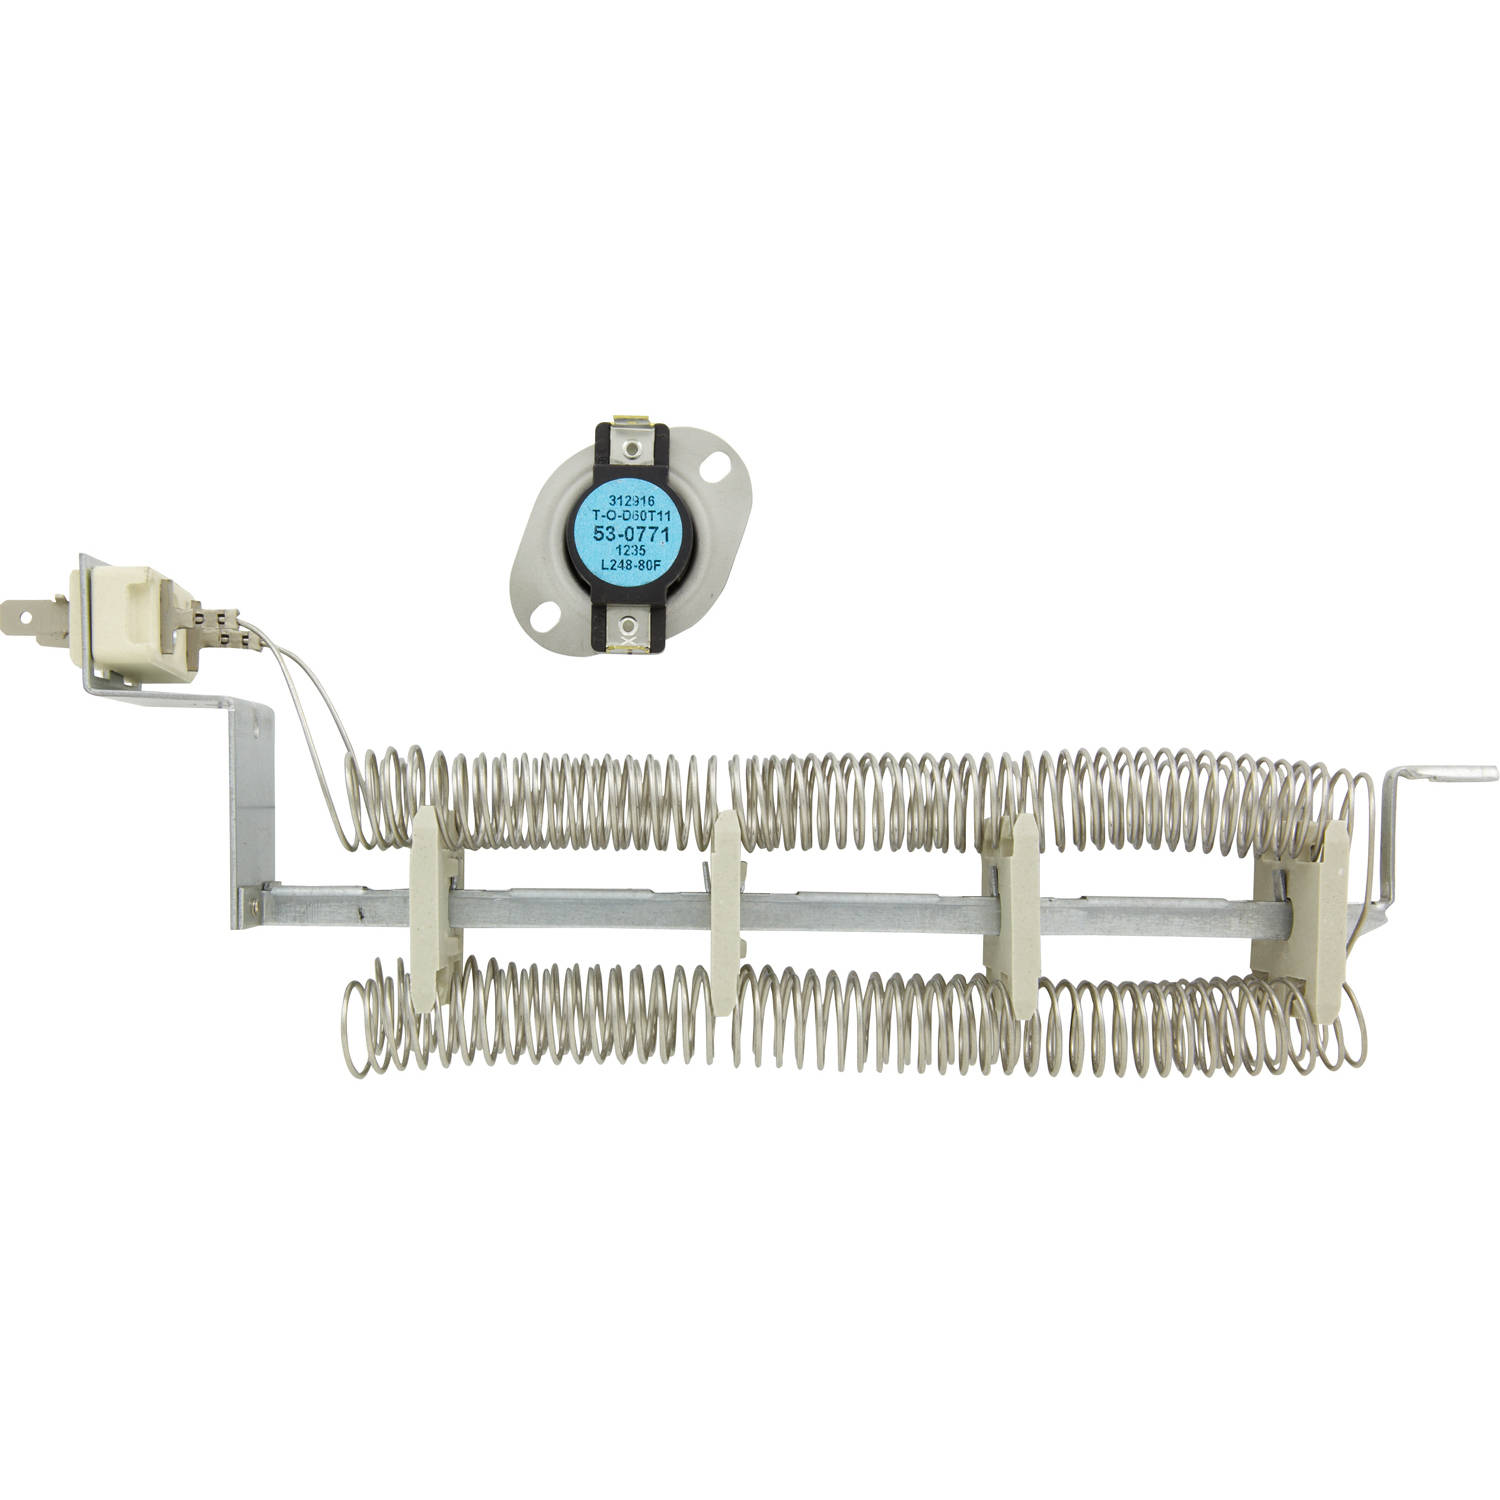 Whirlpool Dryer Heating Element Assembly Kit. Part #LA-1044